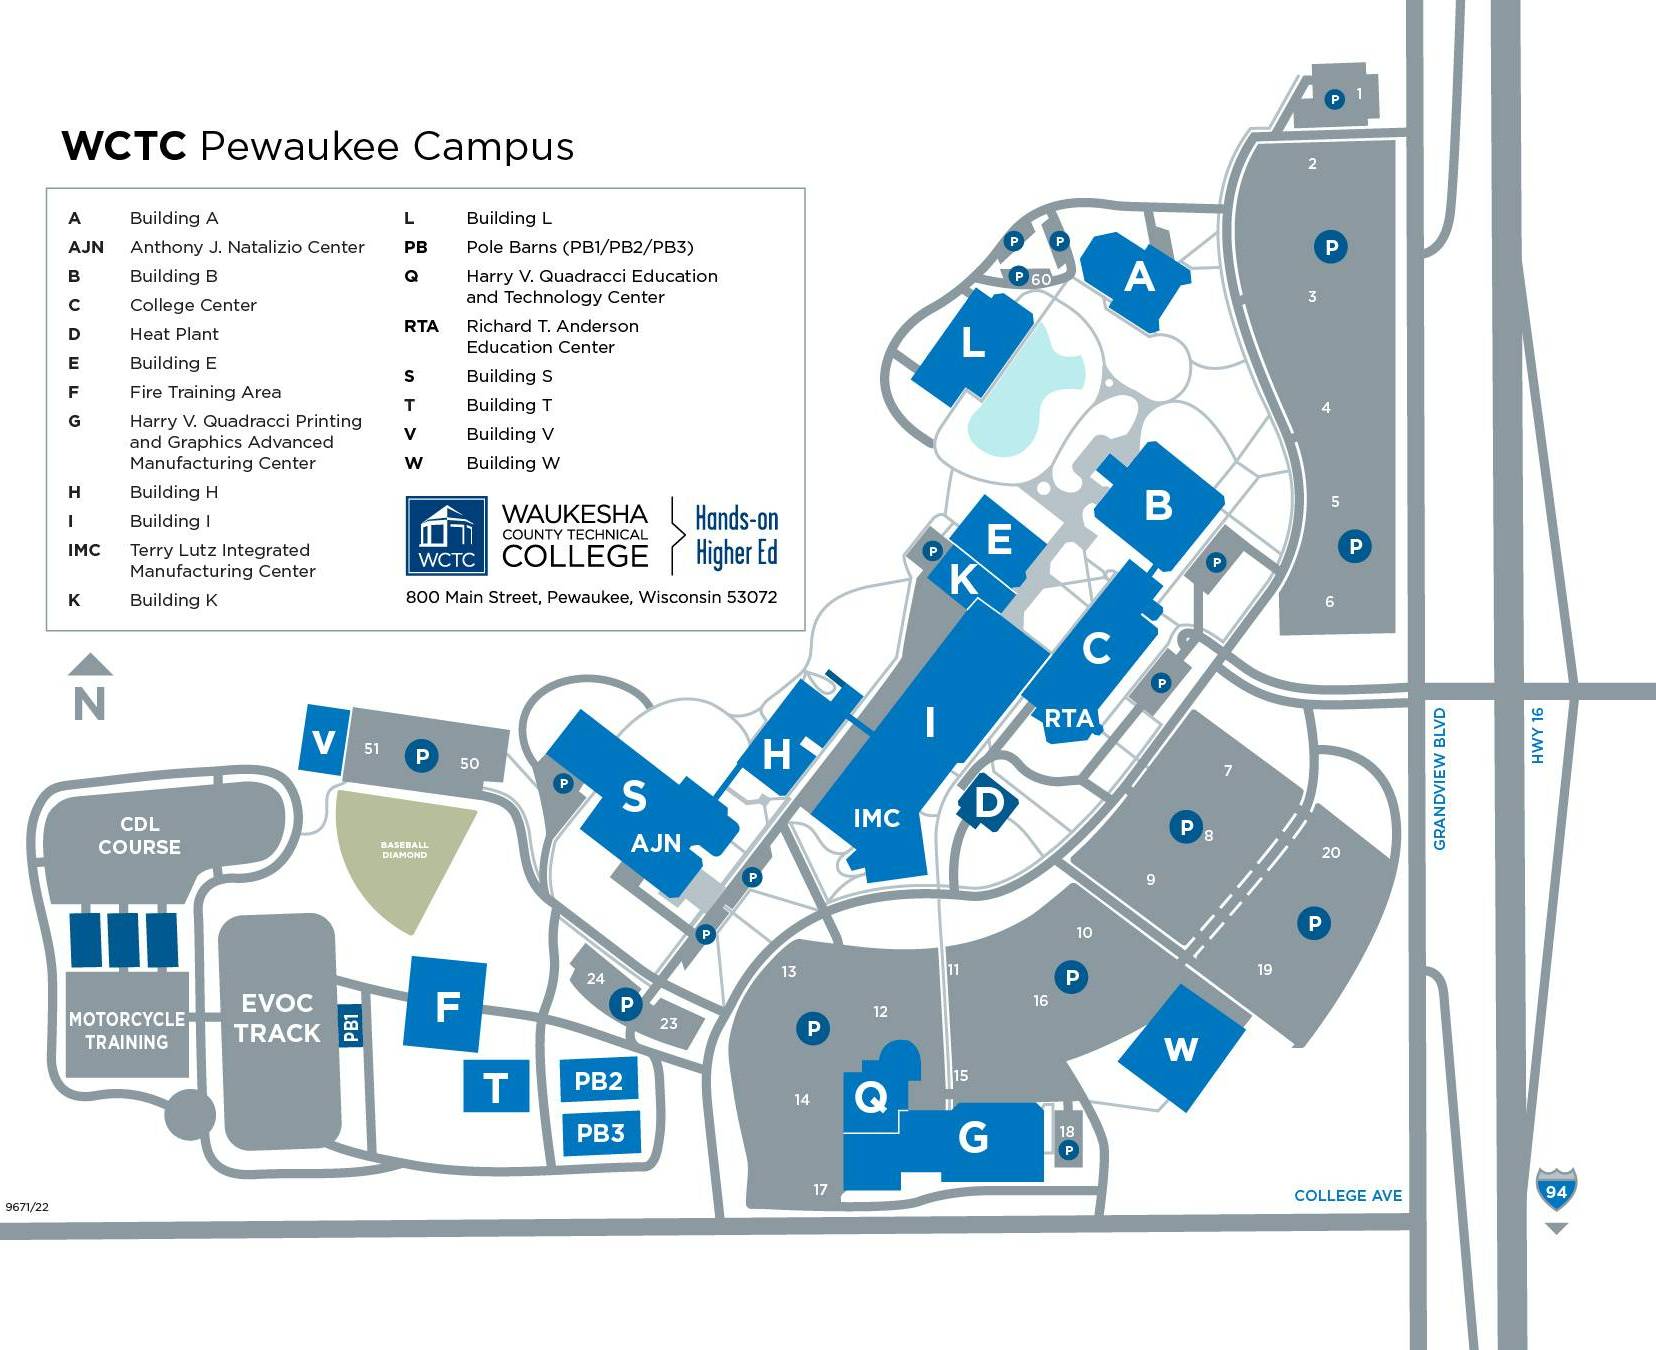 WCTC Pewaukee Campus Map